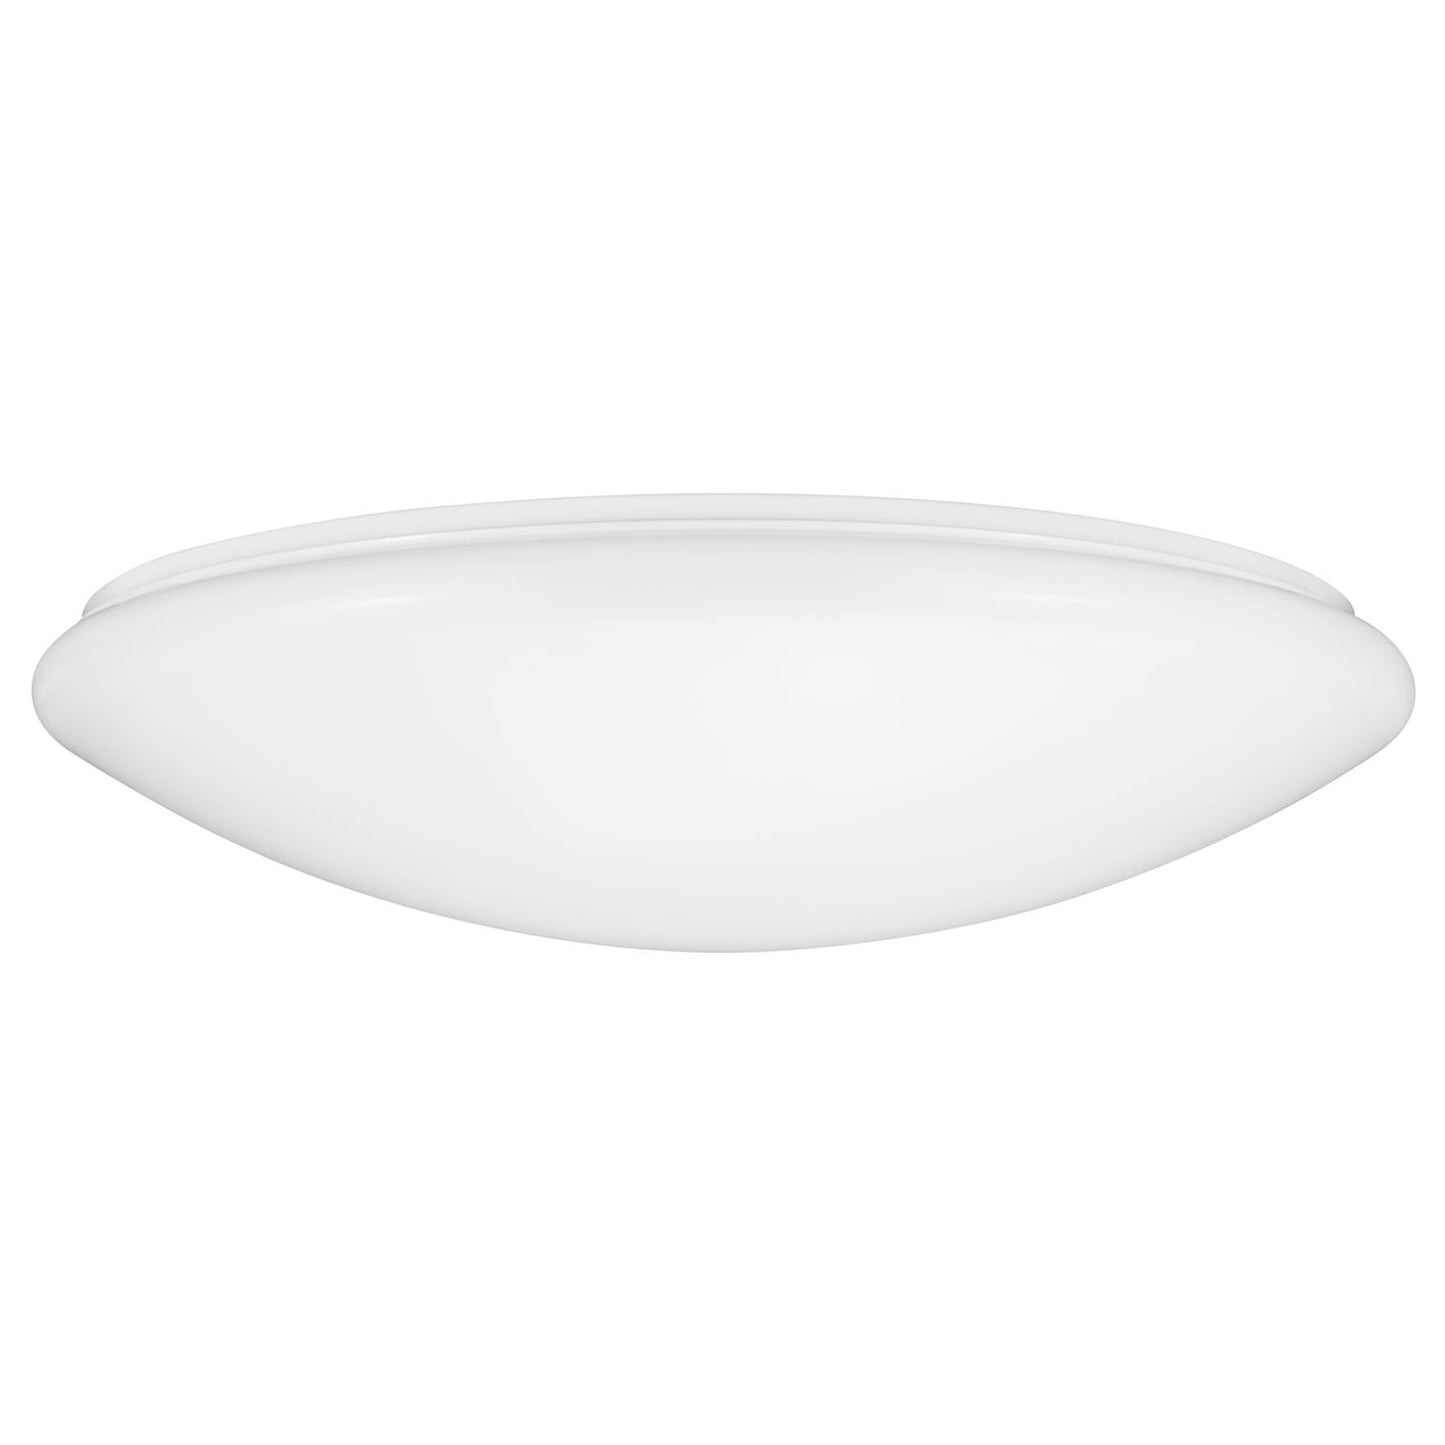 Sunlite 49117-SU LED Mushroom Ceiling Light Fixture, 16 Watt, Dimmable, 1050 Lumen, 40K - Cool White